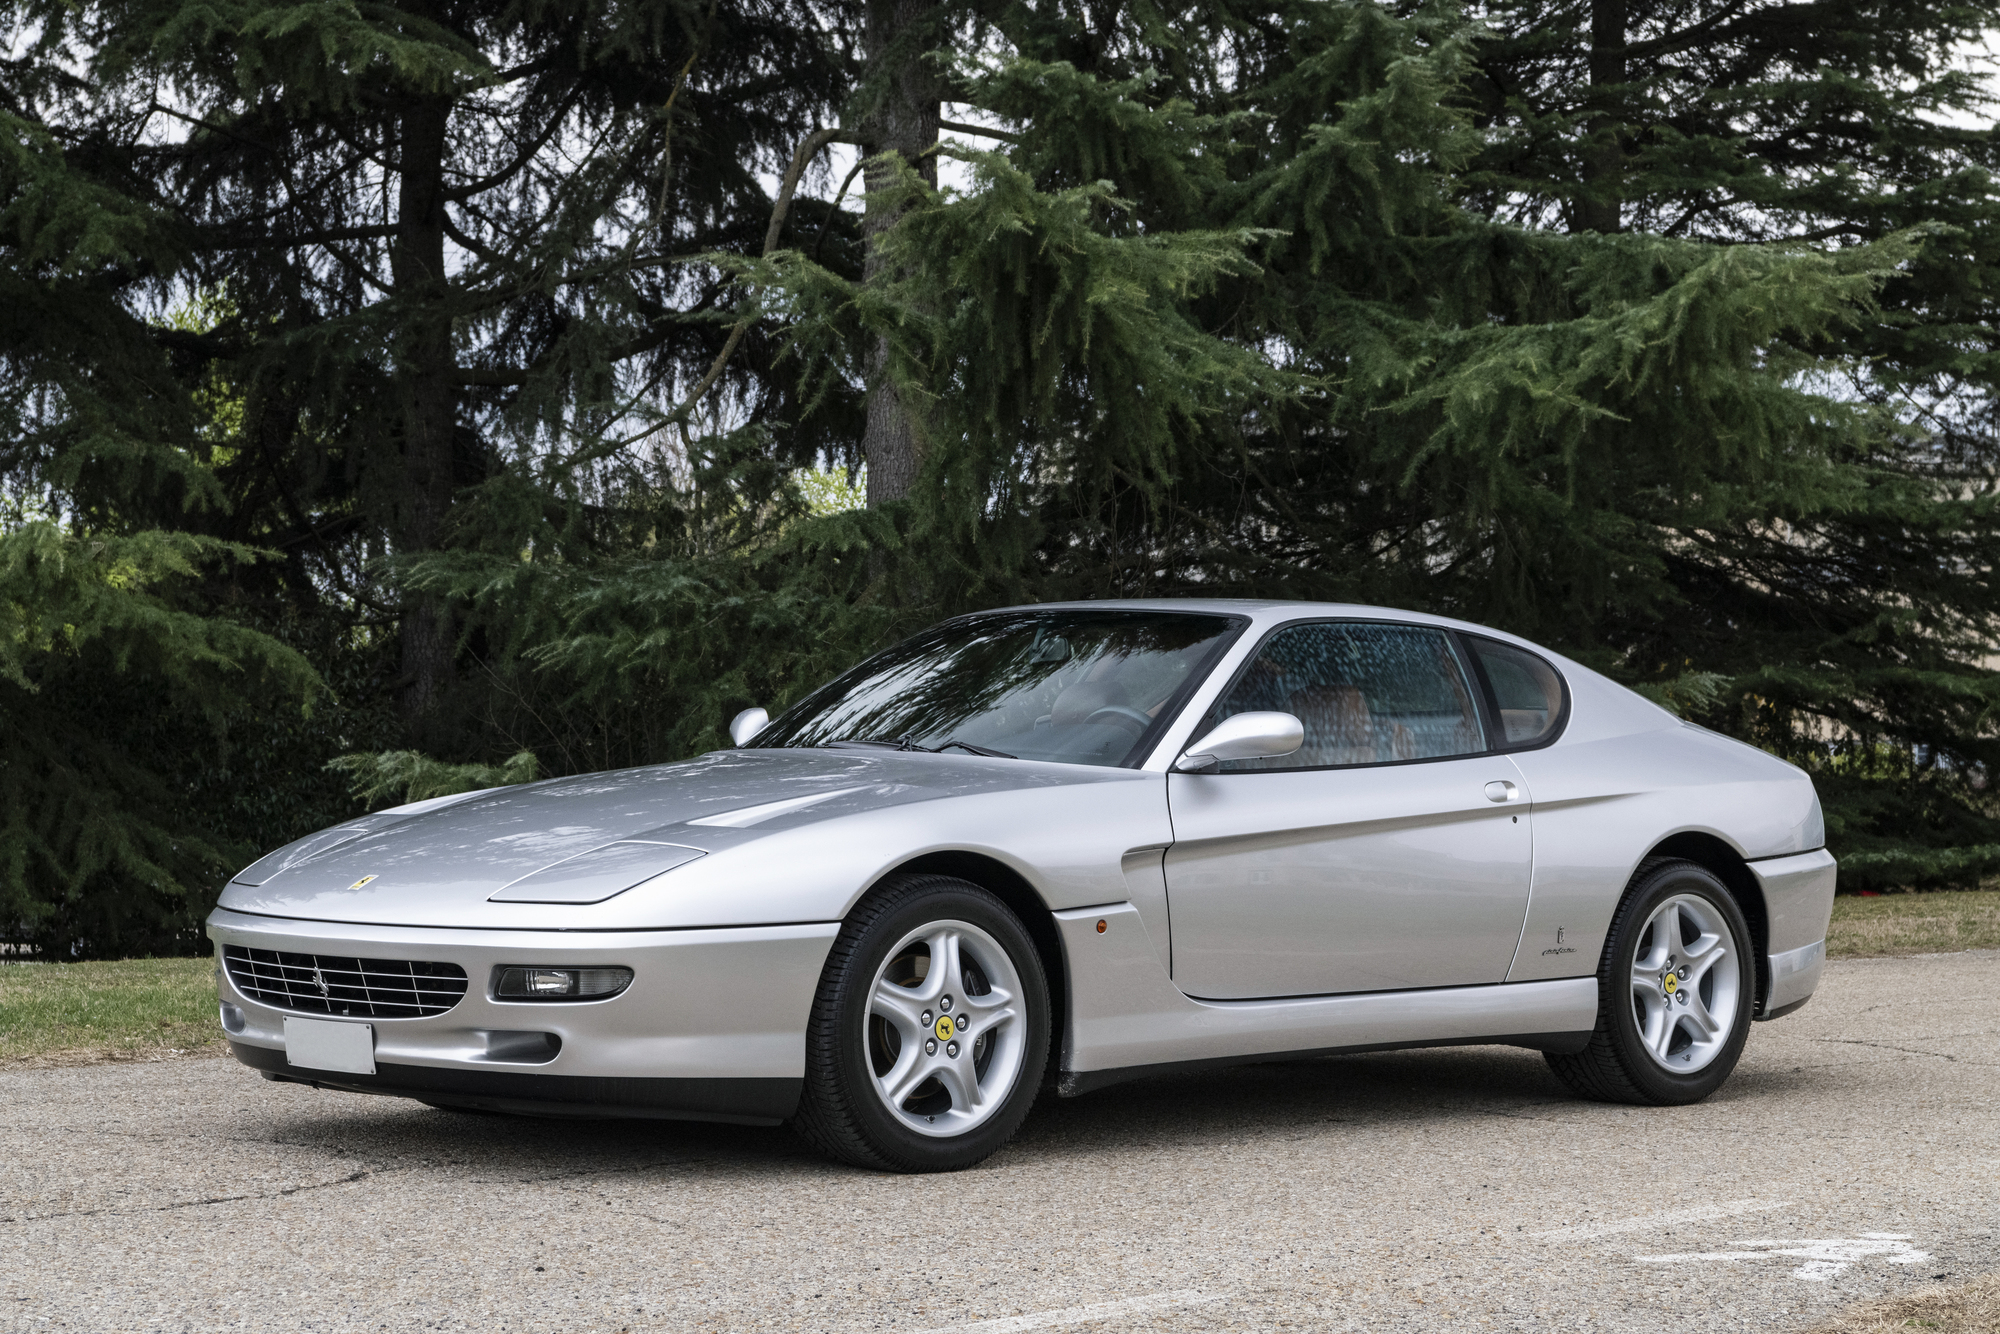 Ferrari 456 GT 採用雙門車身，搭配大尺碼引擎、 高容量油箱，是標準的頂級 GT 跑車。